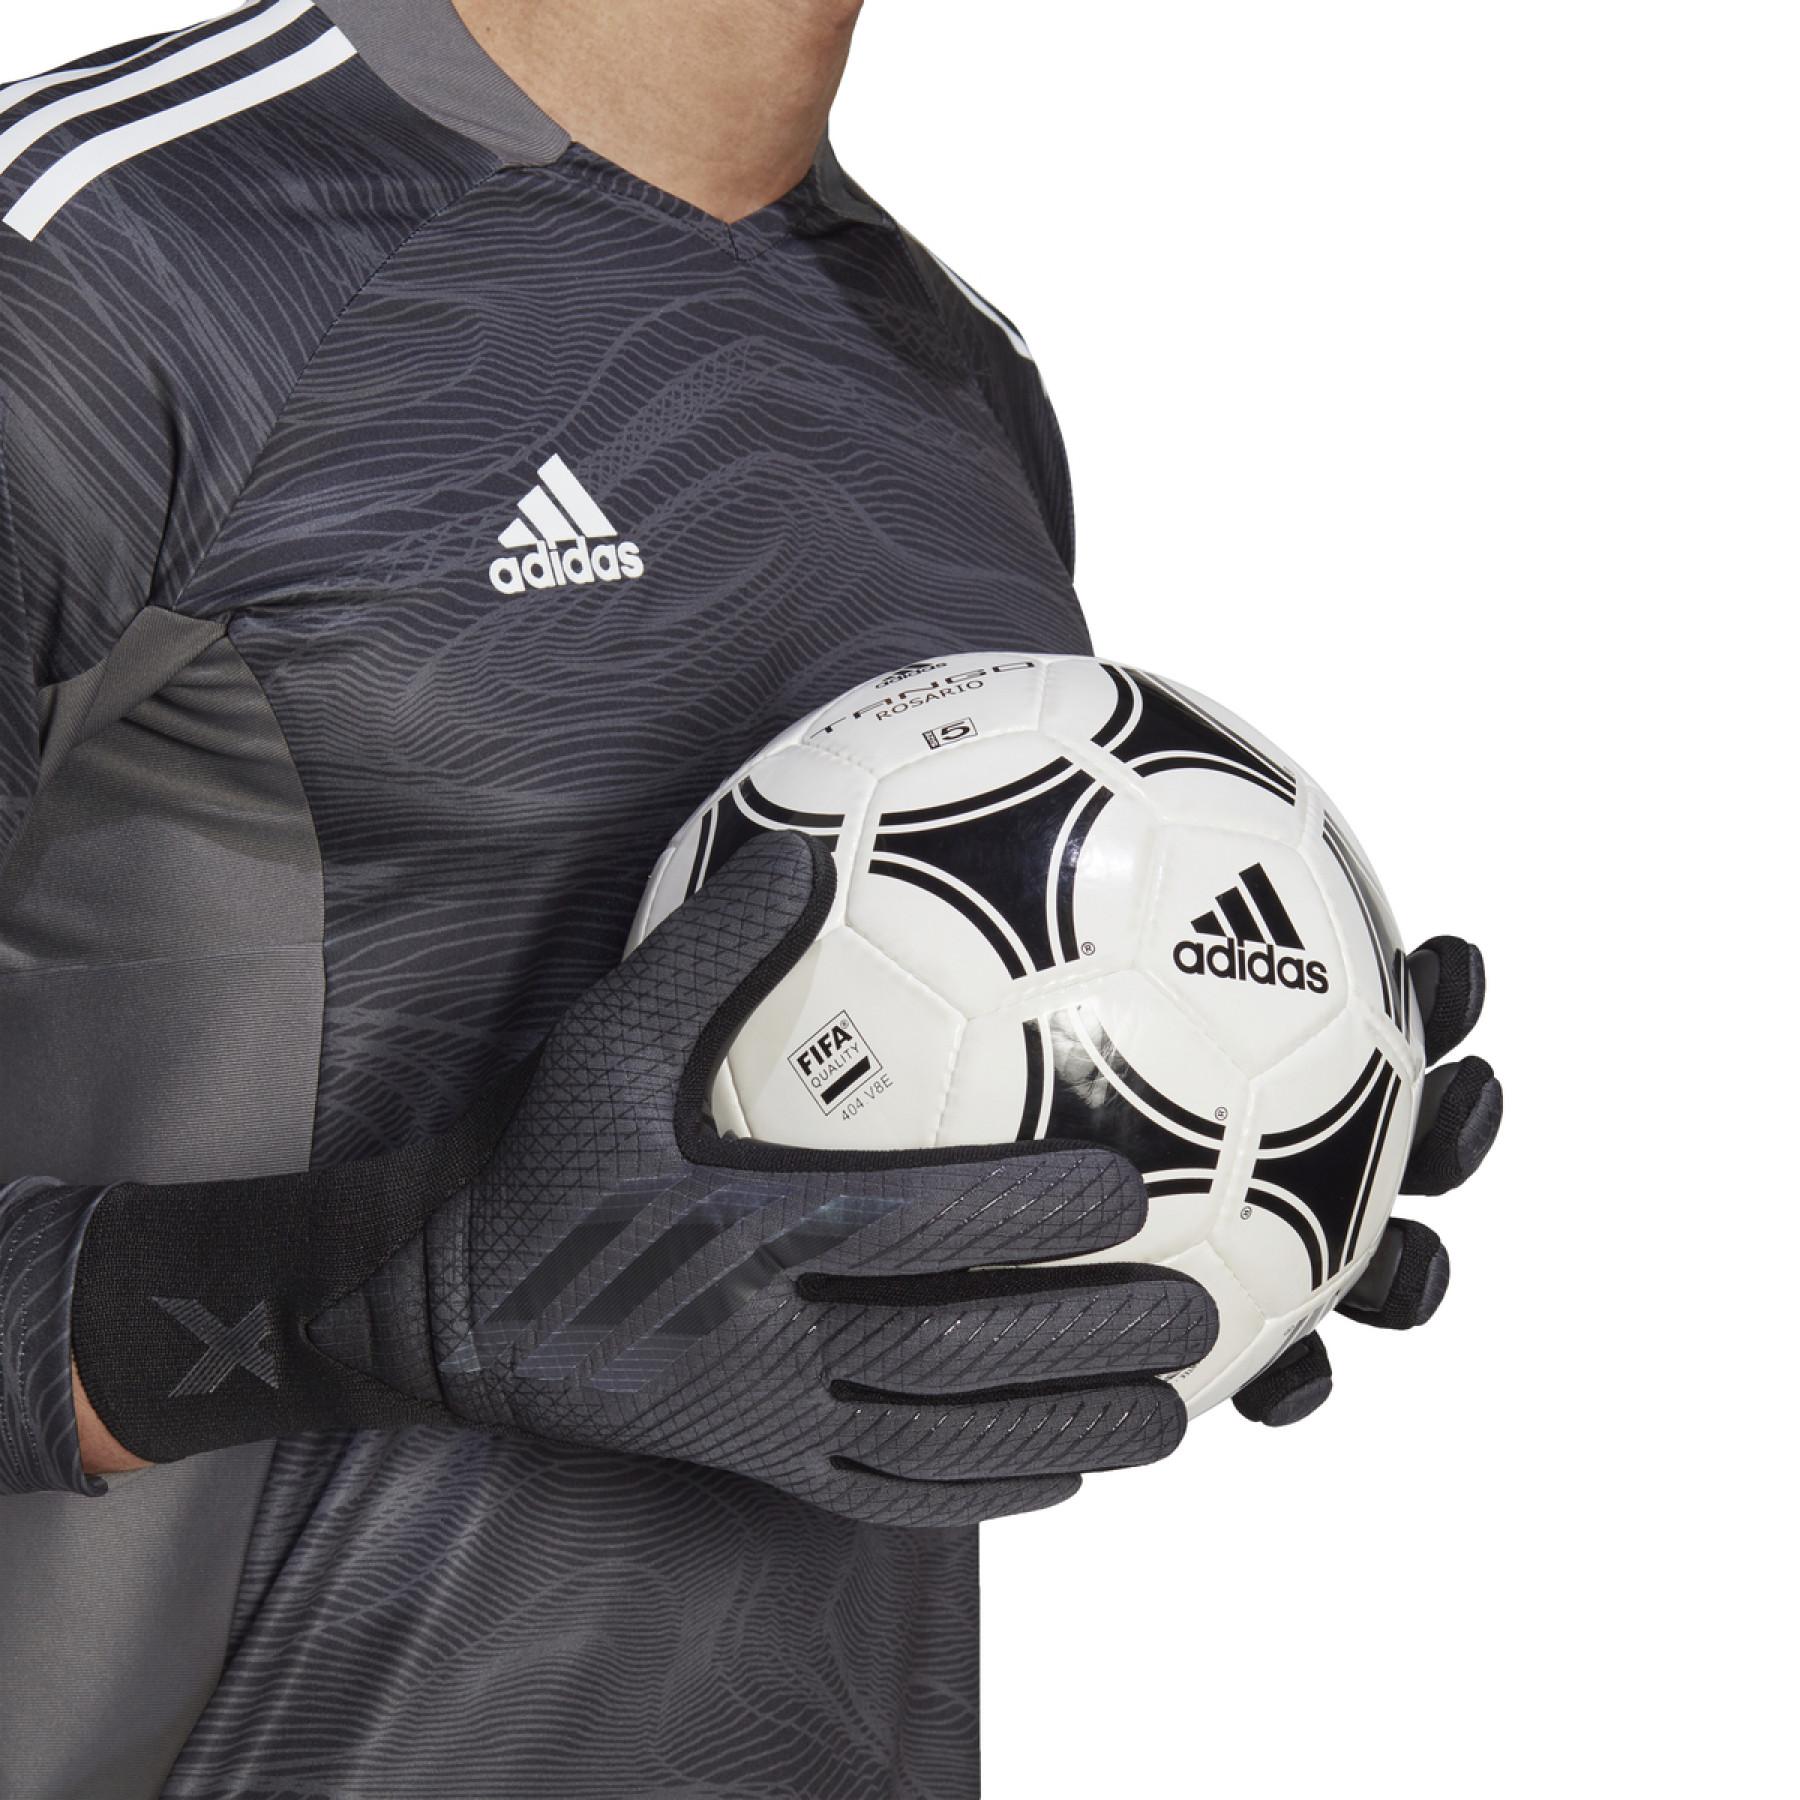 Adidas Goalie Gloves X Gl Pro